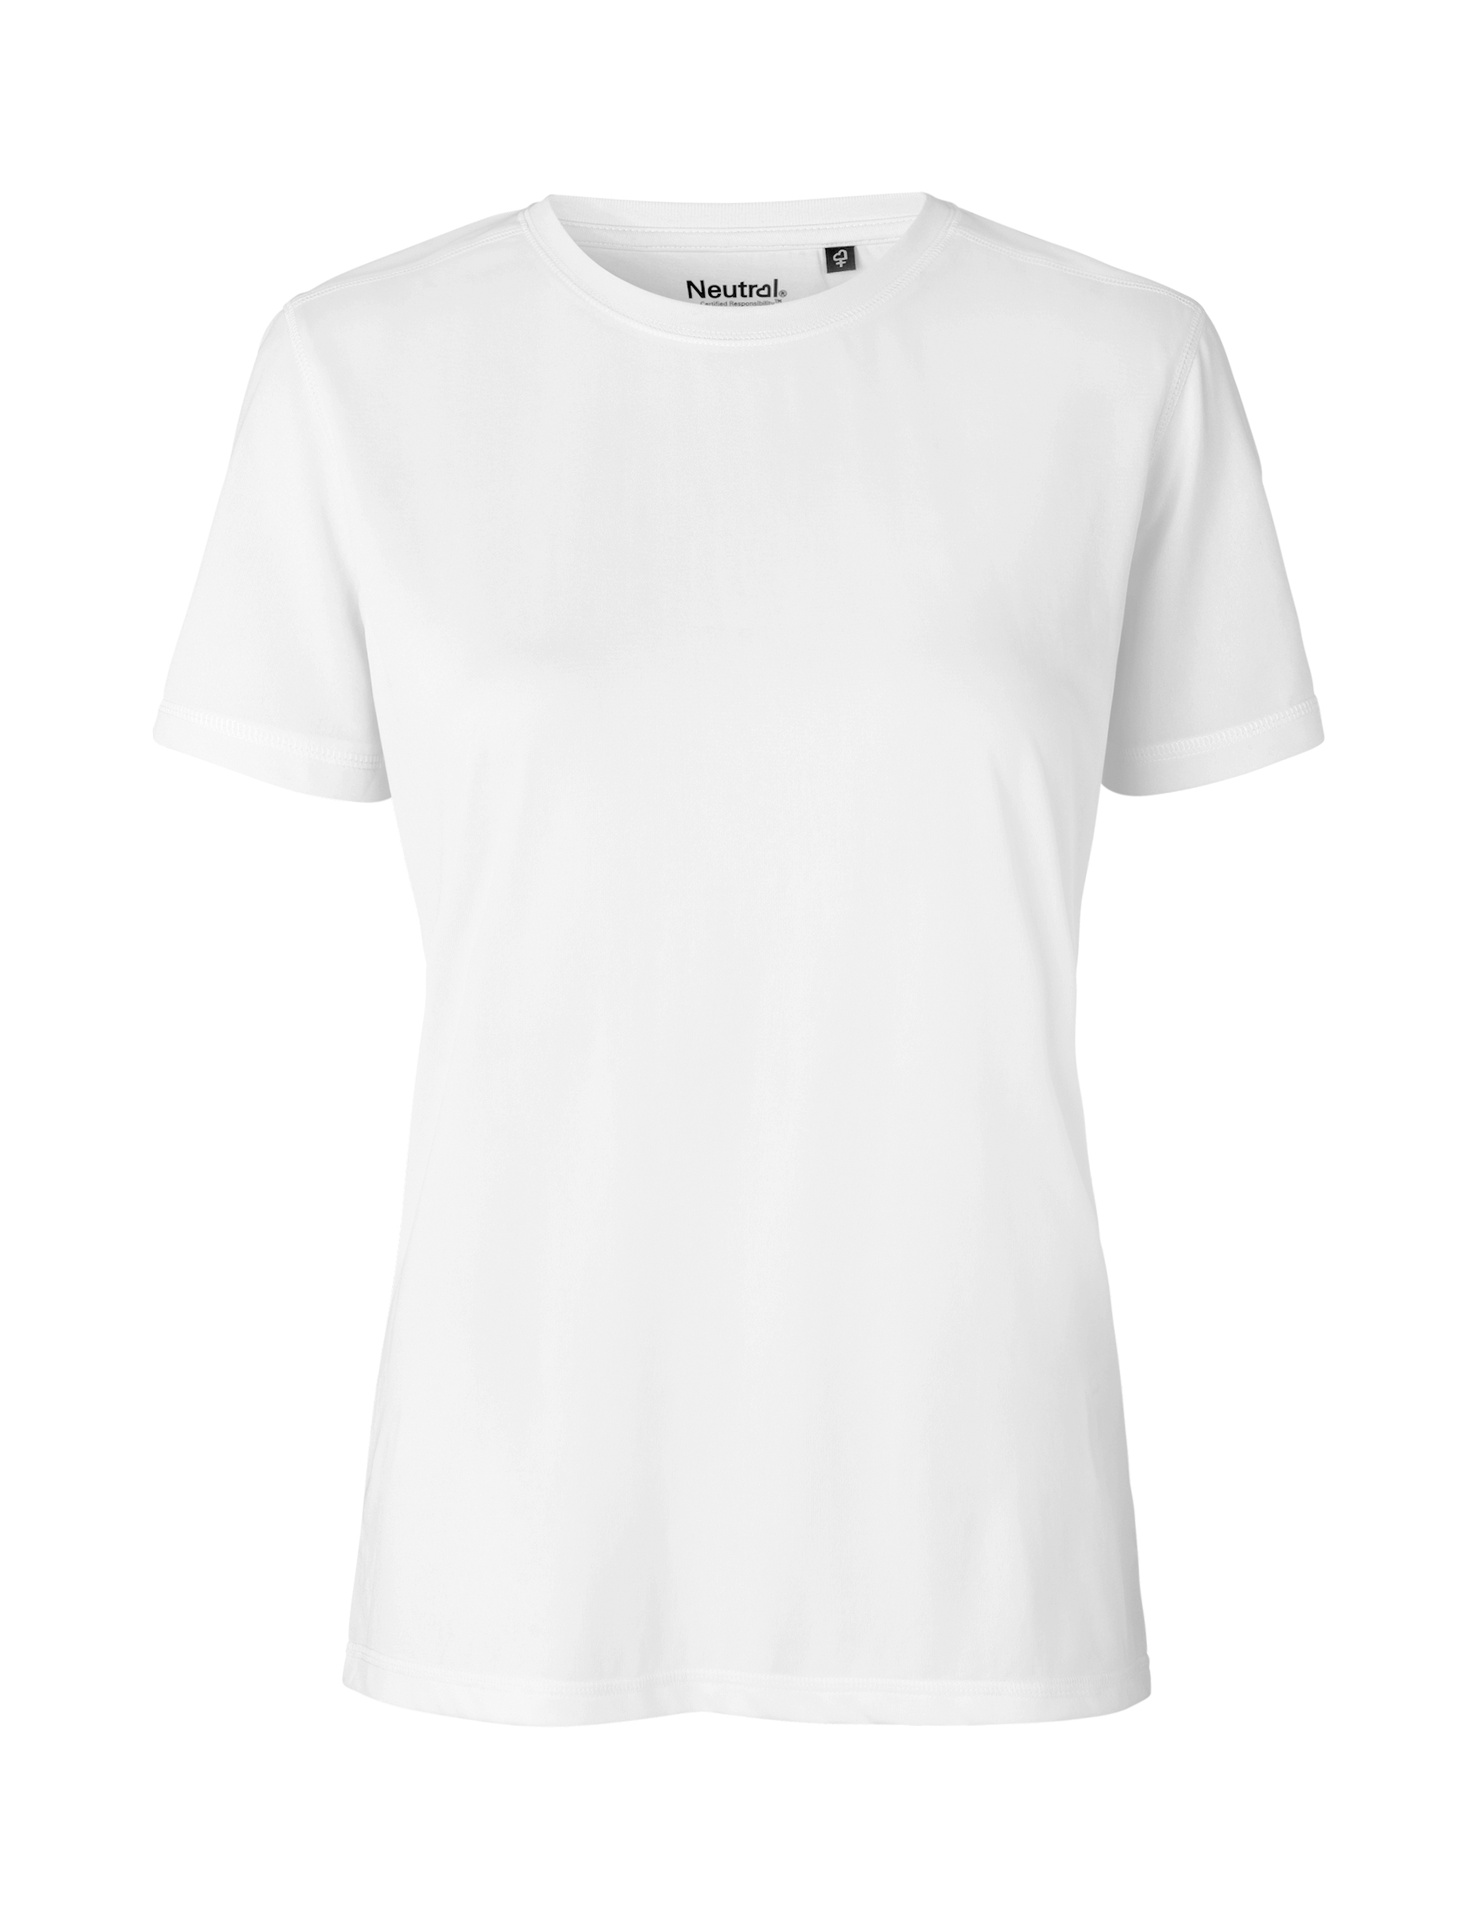 [PR/05196] Ladies Recycled Performance T-Shirt (White 01, XL)